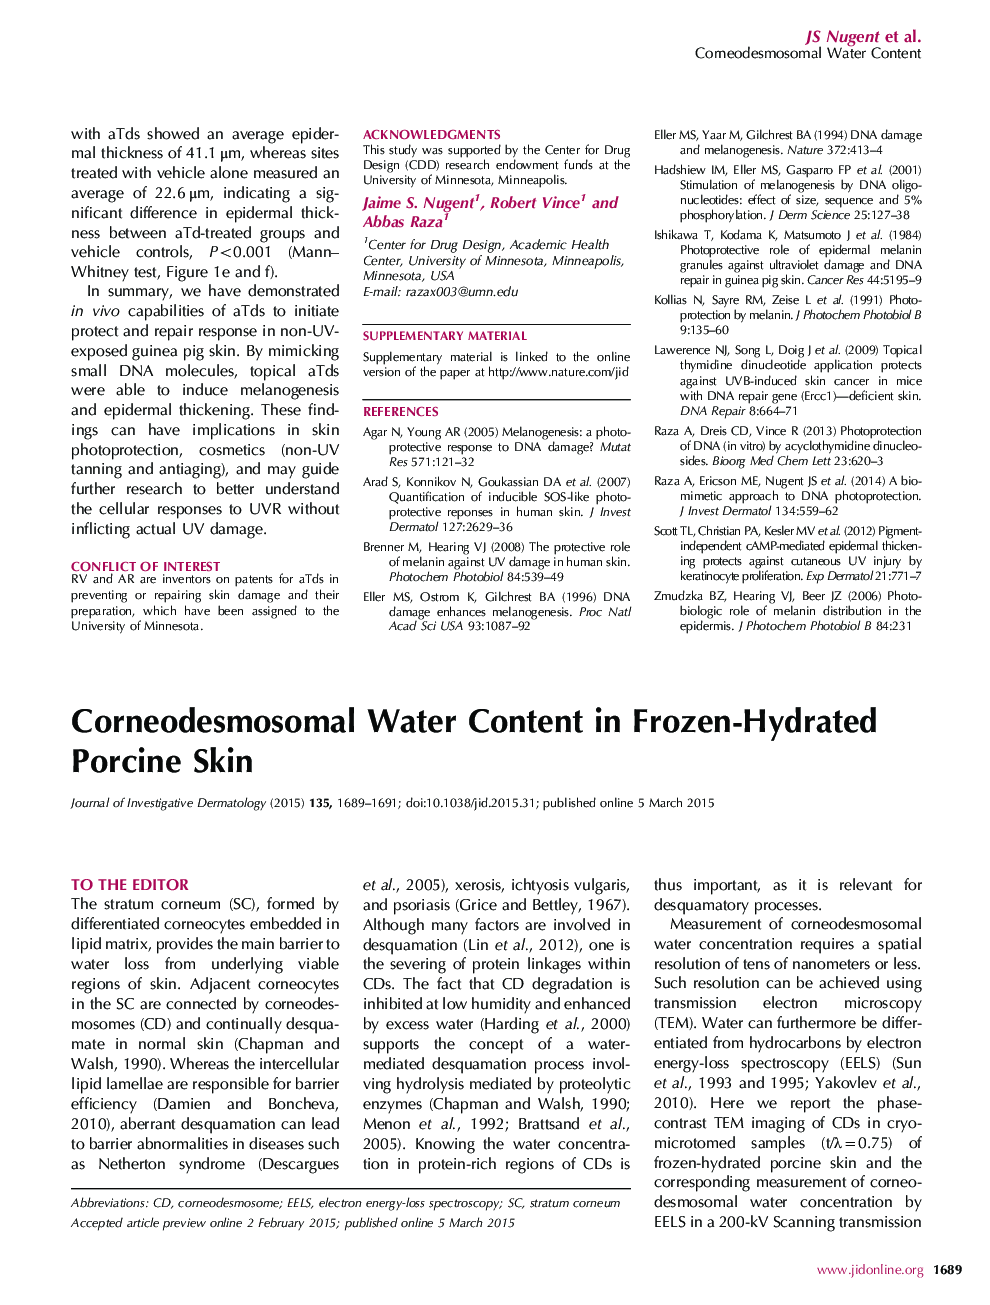 Corneodesmosomal Water Content in Frozen-Hydrated Porcine Skin